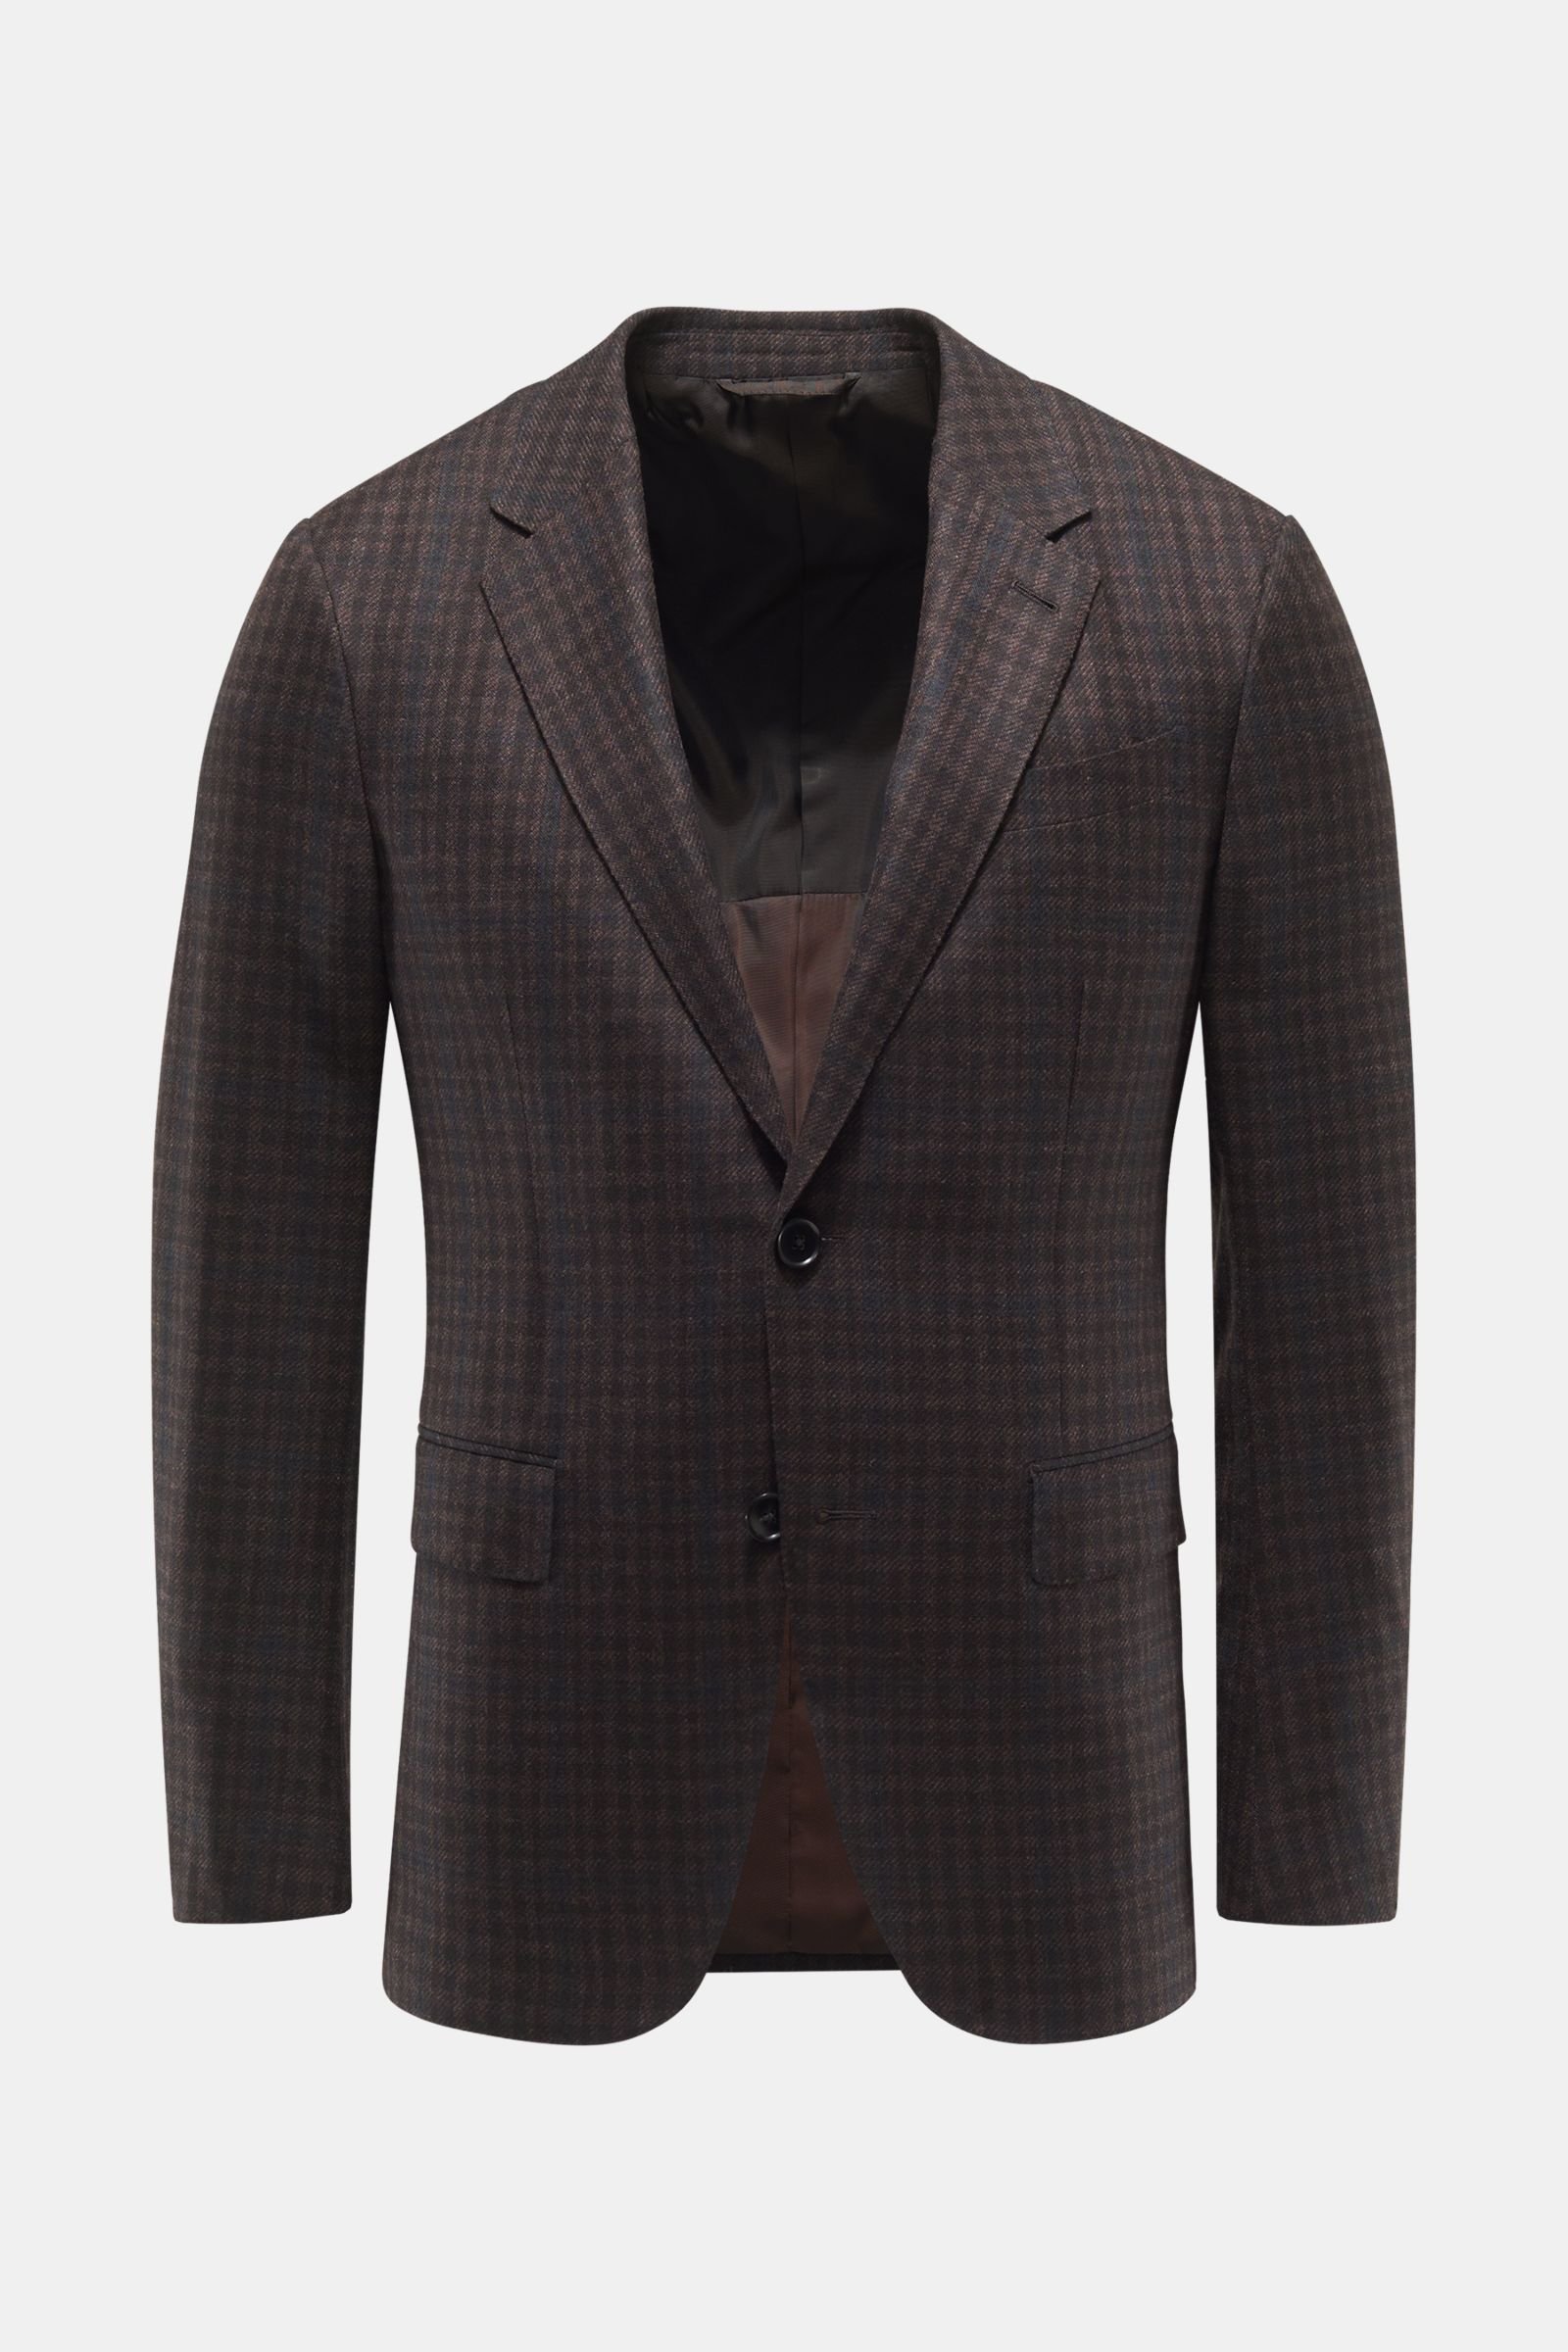 Smart-casual jacket dark brown checked